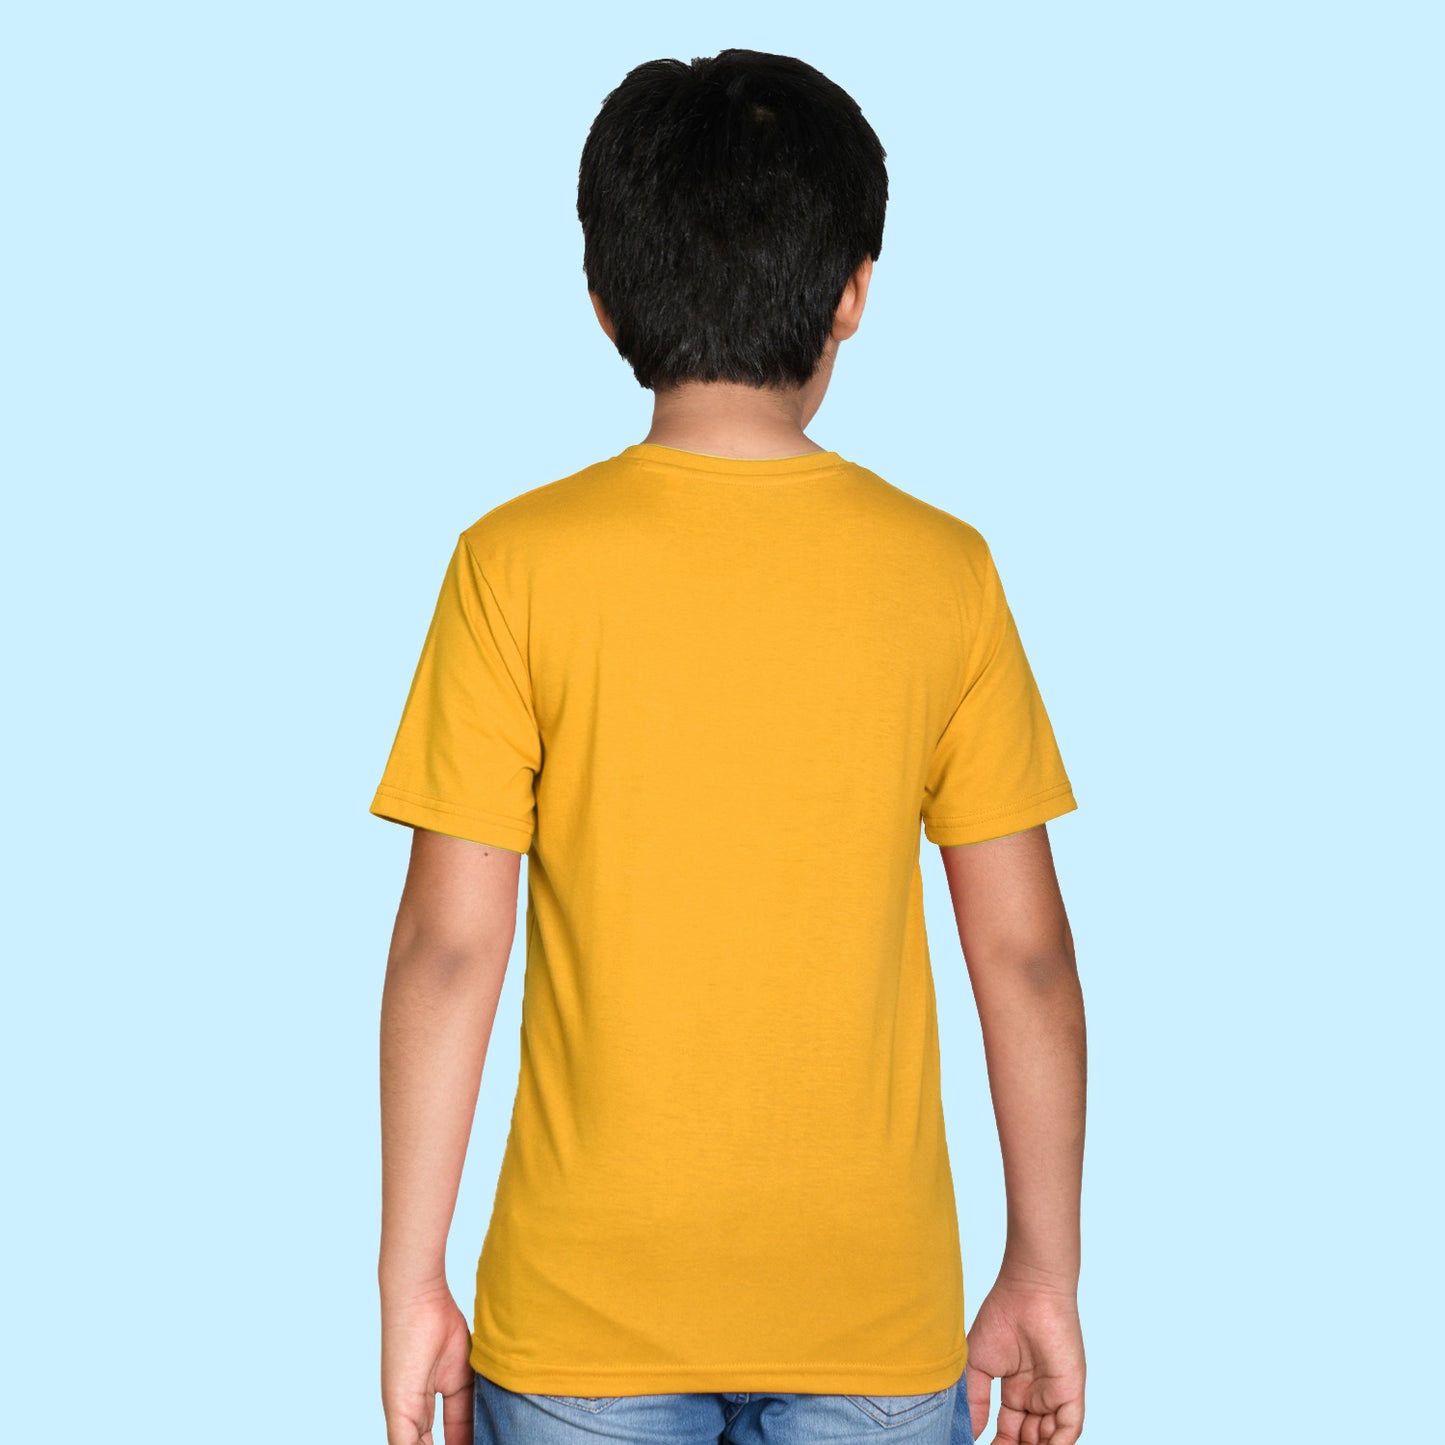 Nusyl boys genius printed yellow colored cotton rich tshirt